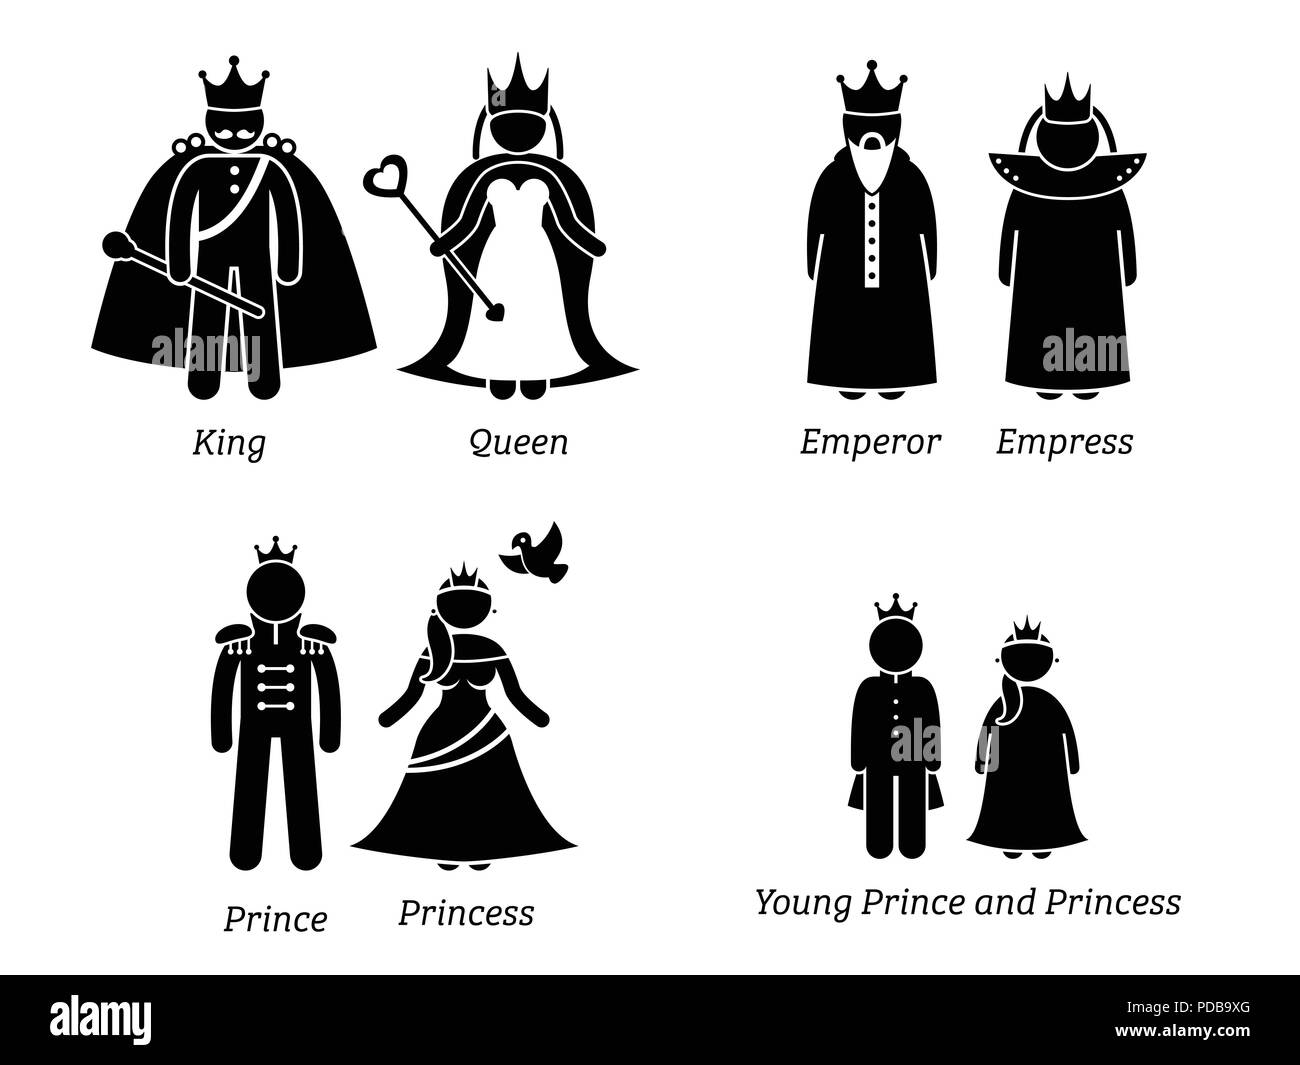 Royal Family Characters. Stock Vector